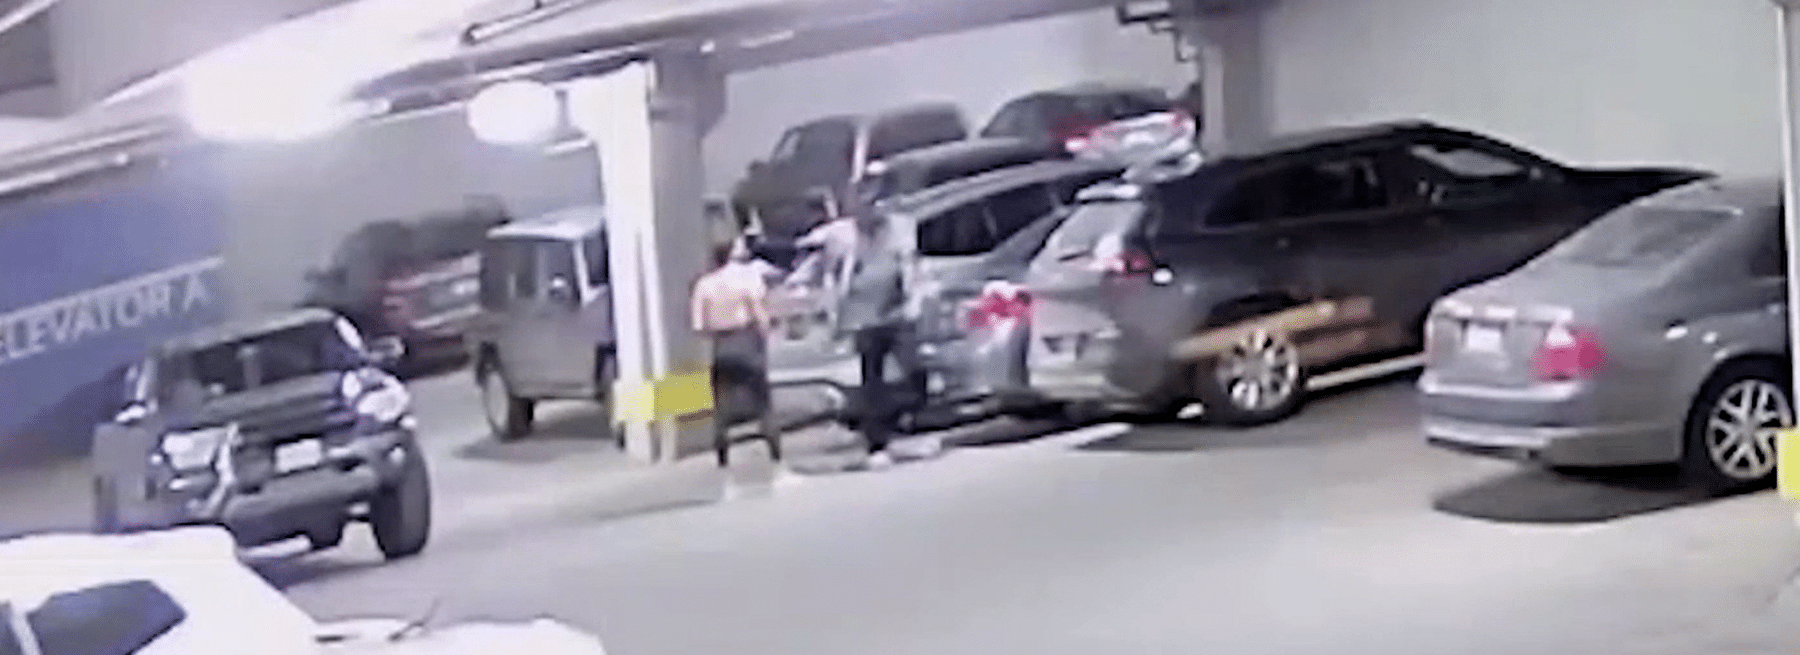 Physical Domestic Dispute in Parking Garage Hero